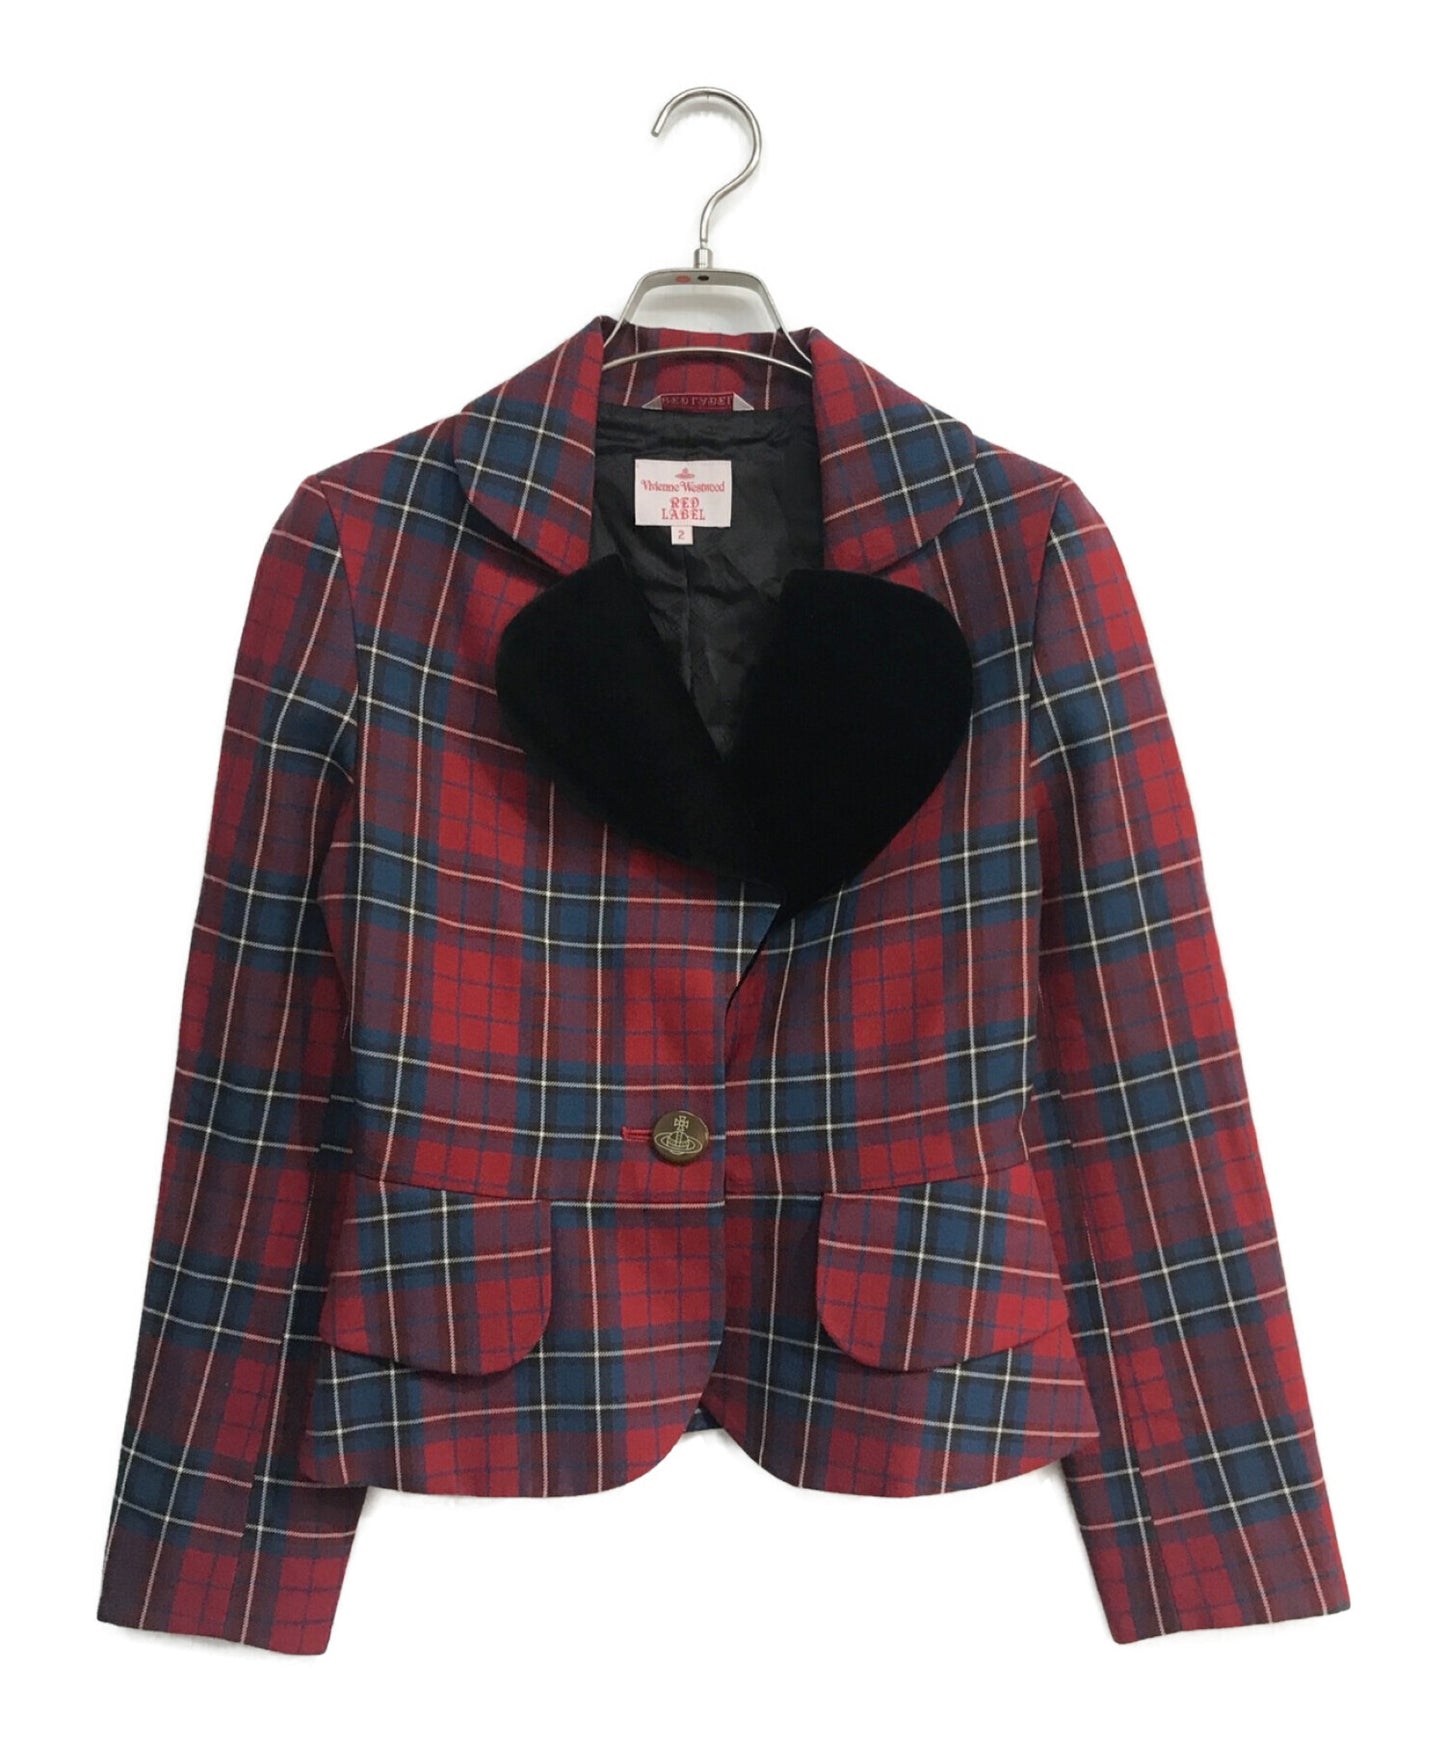 Vivienne Westwood Red Label Tartan Plaid Love Jacket 16-01-452005 16-01-452005